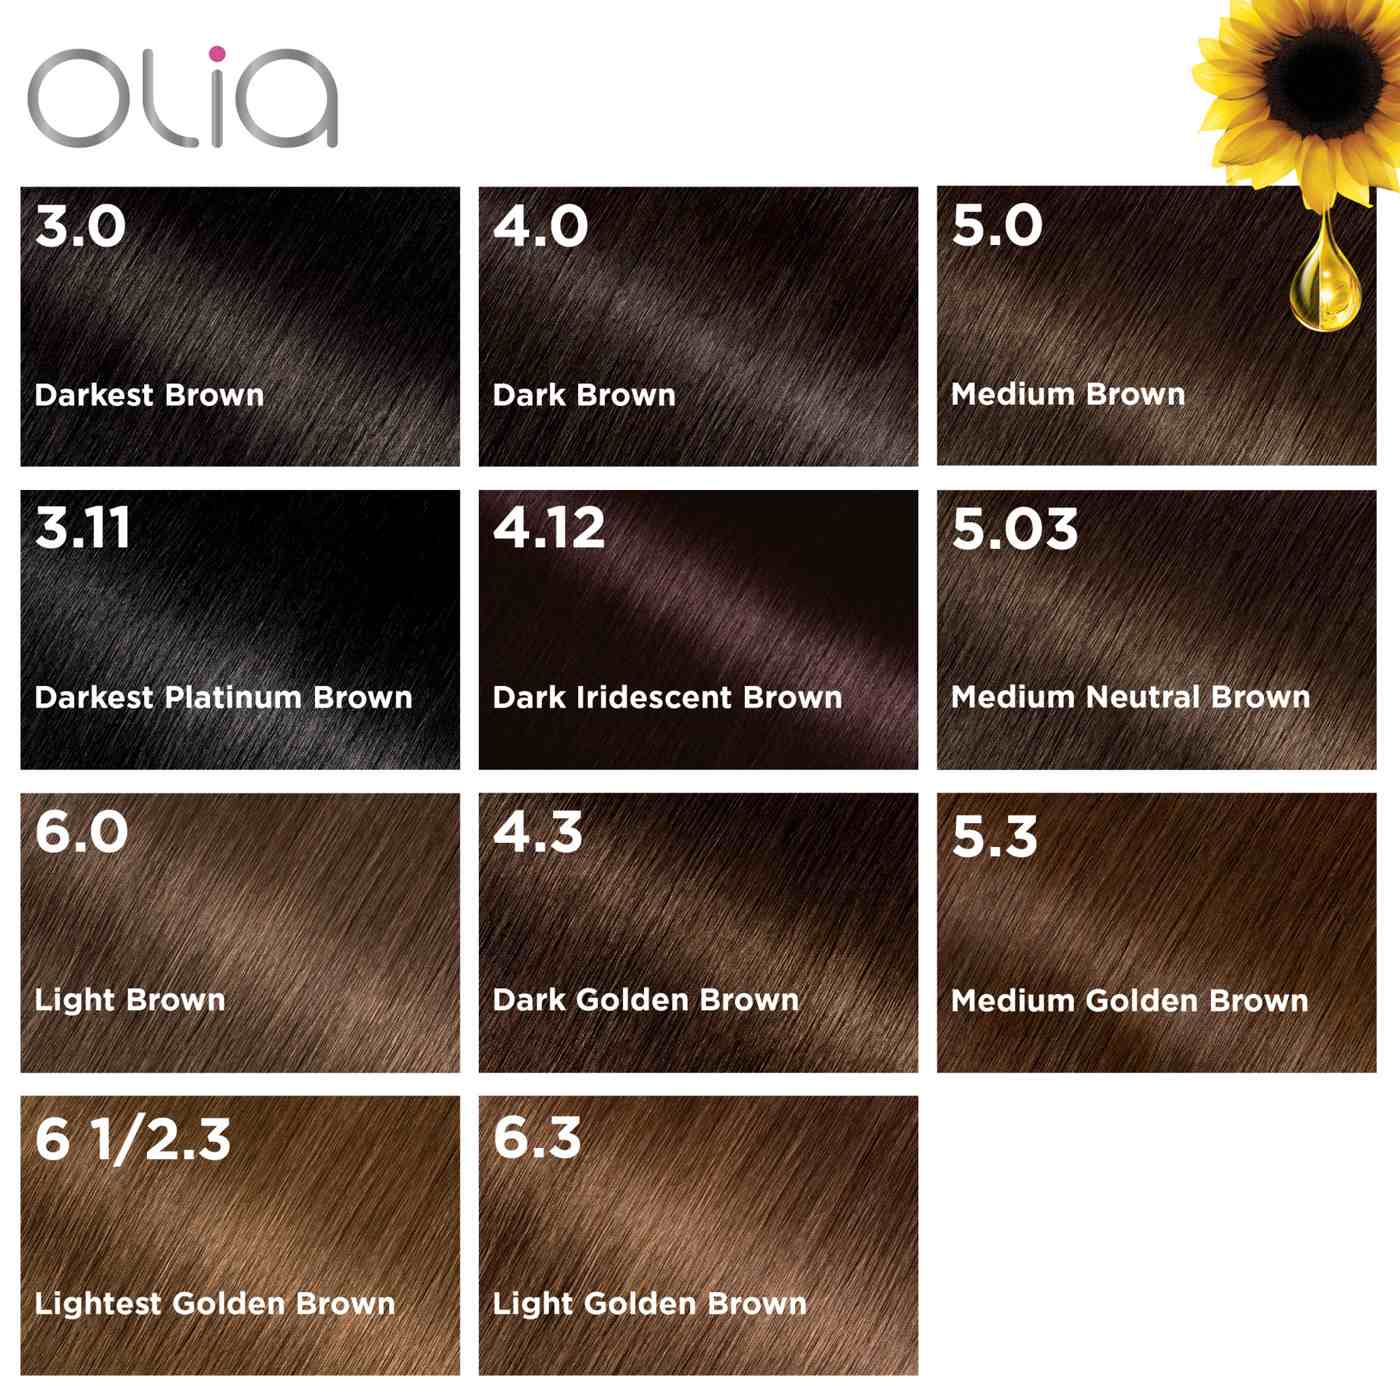 Garnier Olia Oil Powered Ammonia Free Permanent Hair Color 3.0 Darkest Brown; image 11 of 12